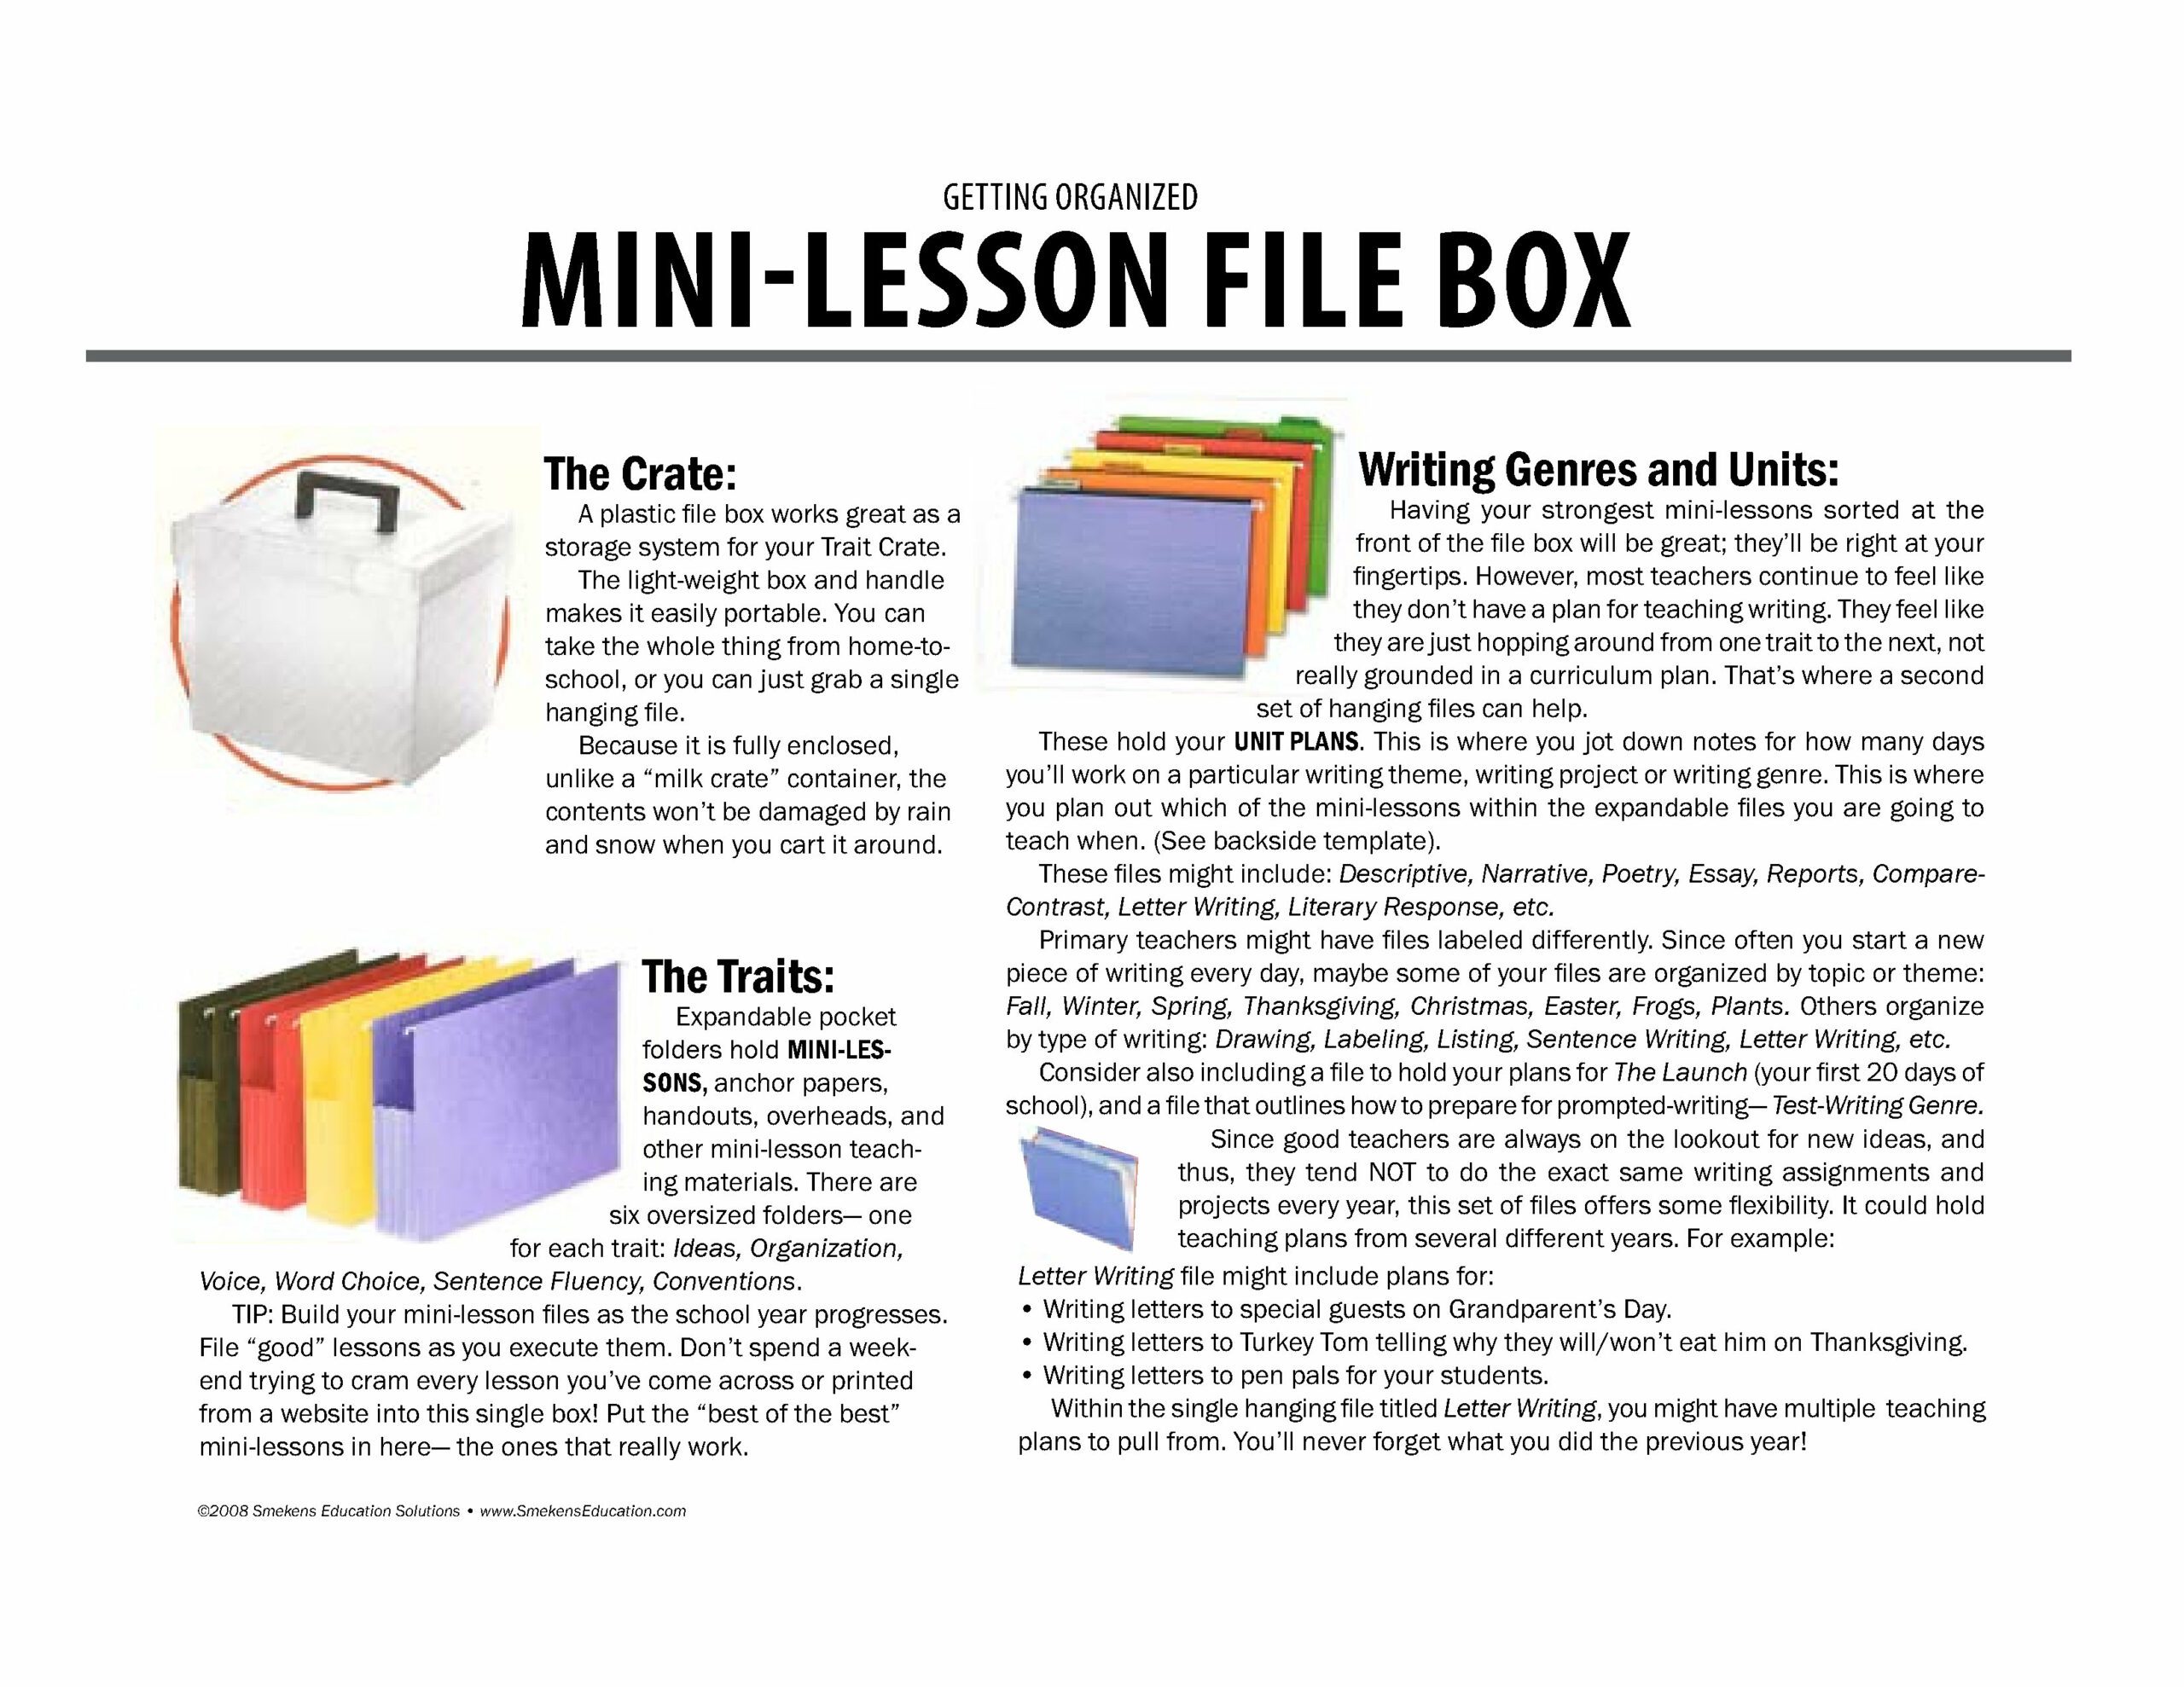 6 Traits of Writing - Mini-Lesson File Box Explanation